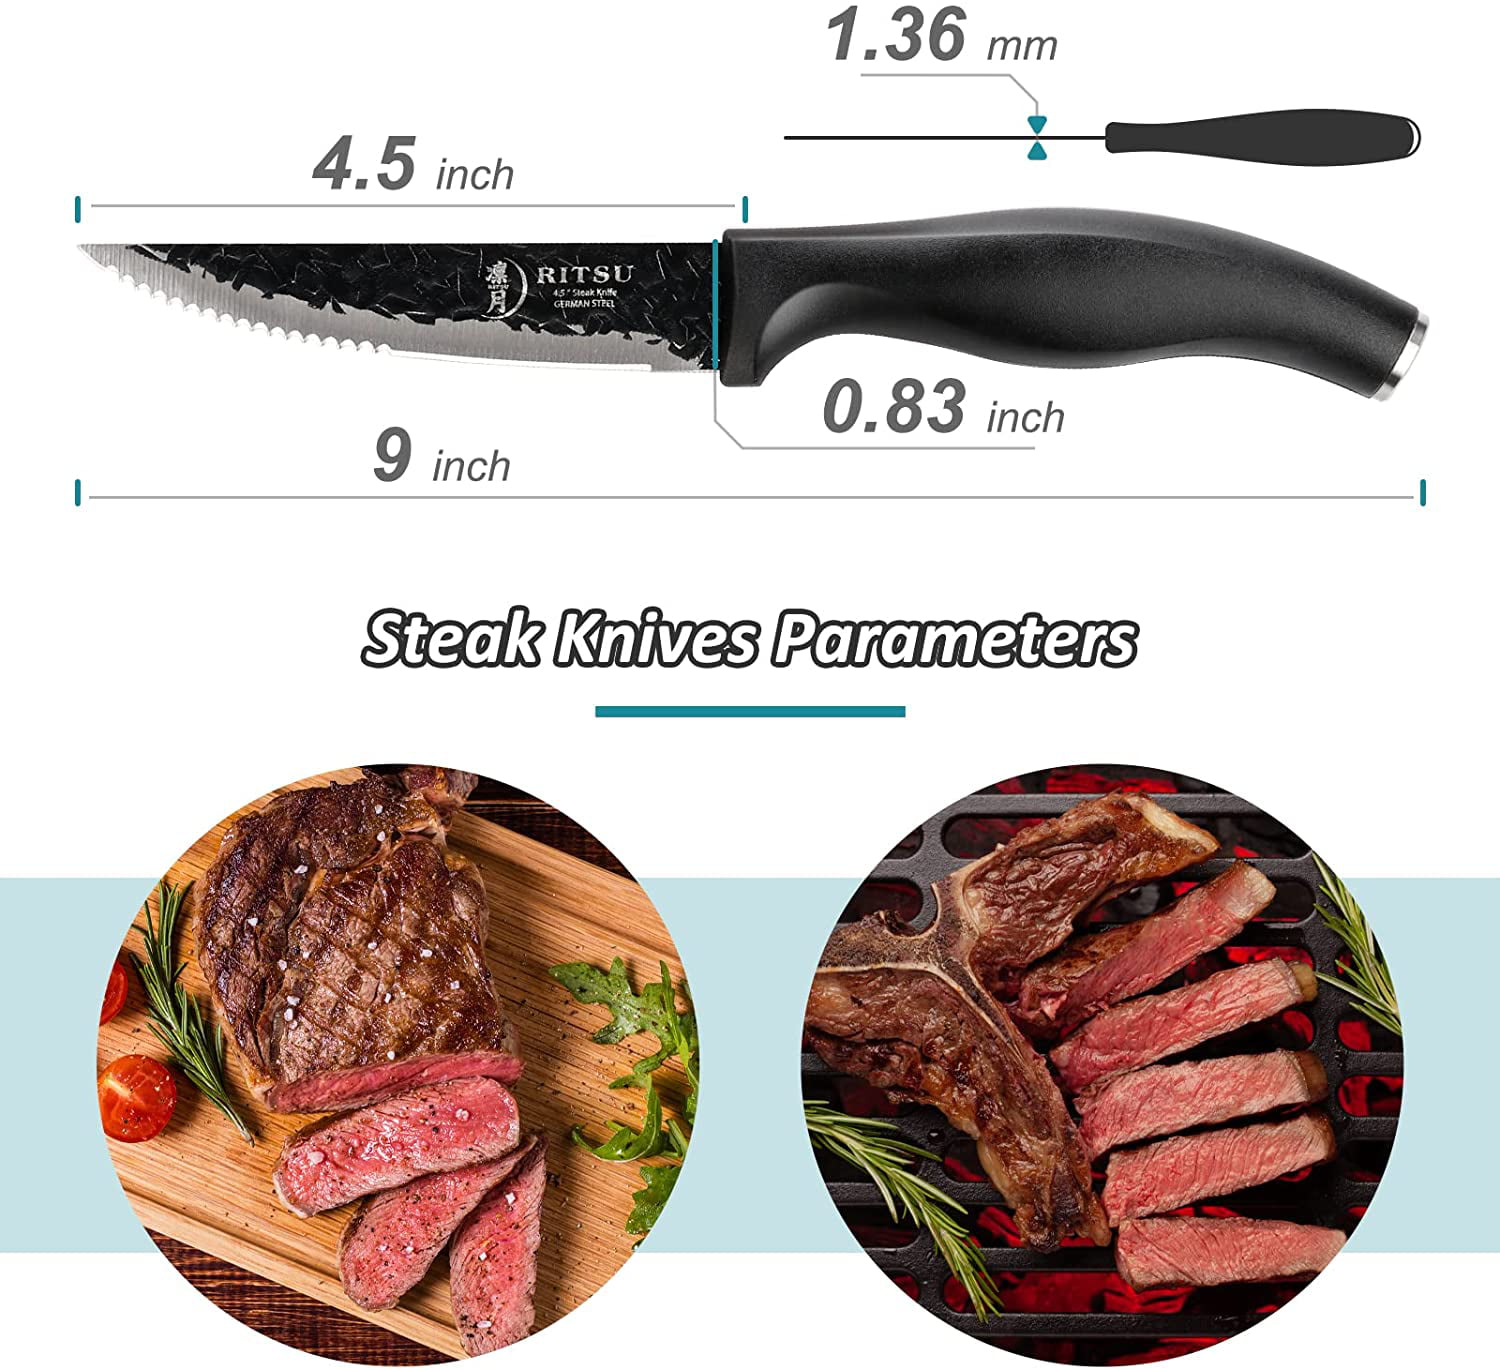 Steak Knife Set, RITSU 4.5" Steak Knives Set of Premium German Steel Steak Knives with Non-stick Coating, Ultra Sharp Serrated Knife, Ergonomic Handle Design, Suitable Home & -